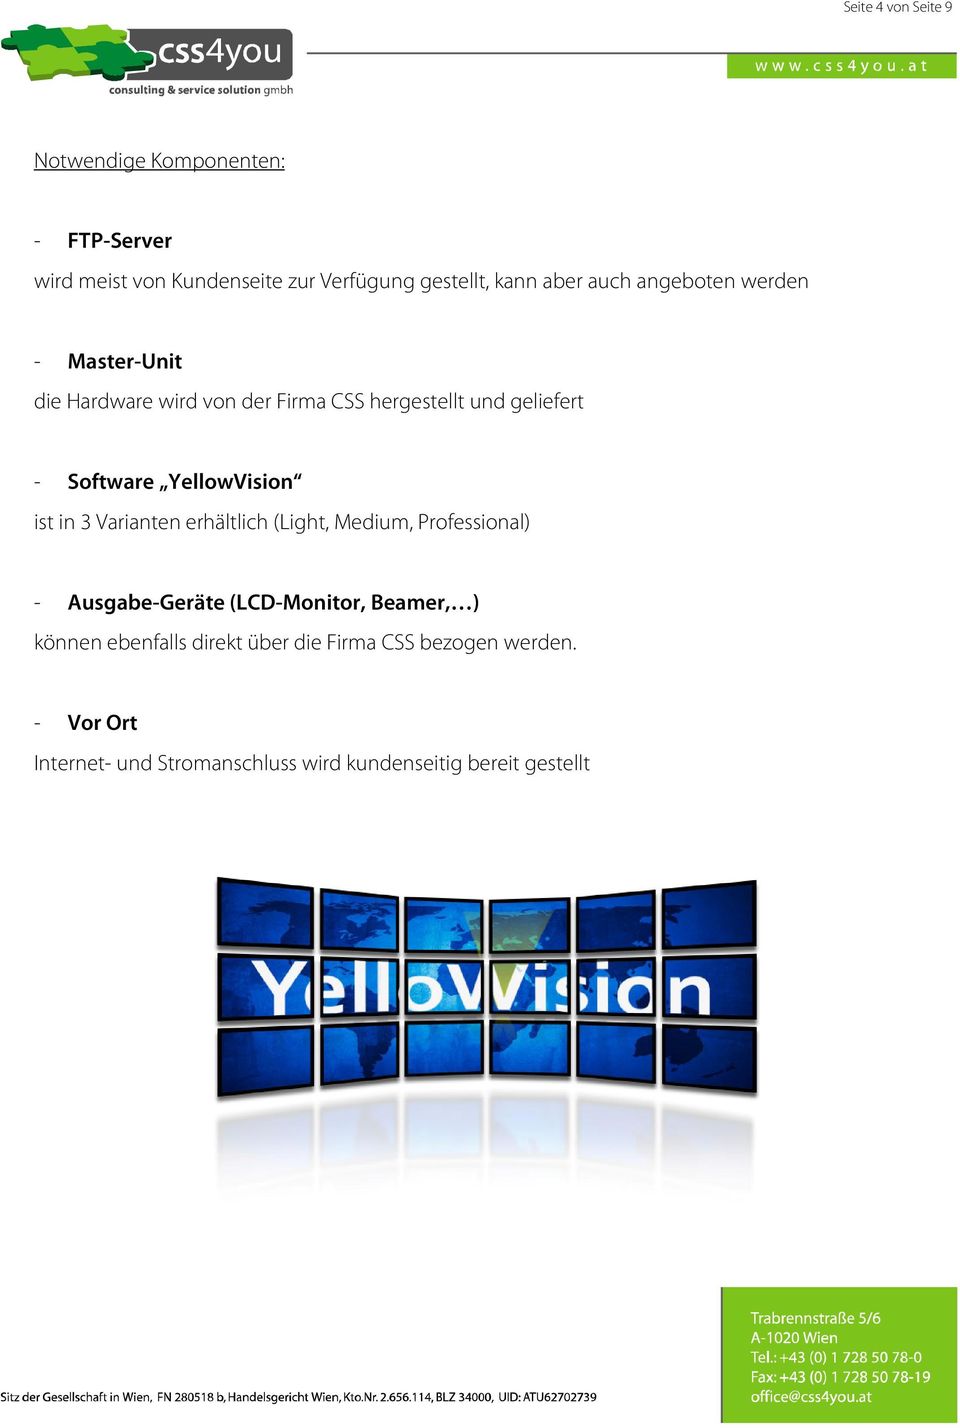 Vision ist in 3 Varianten erhältlich (Light, M edium, Professional) - A usgabe-g eräte (LCD -M onitor,beamer, ) können